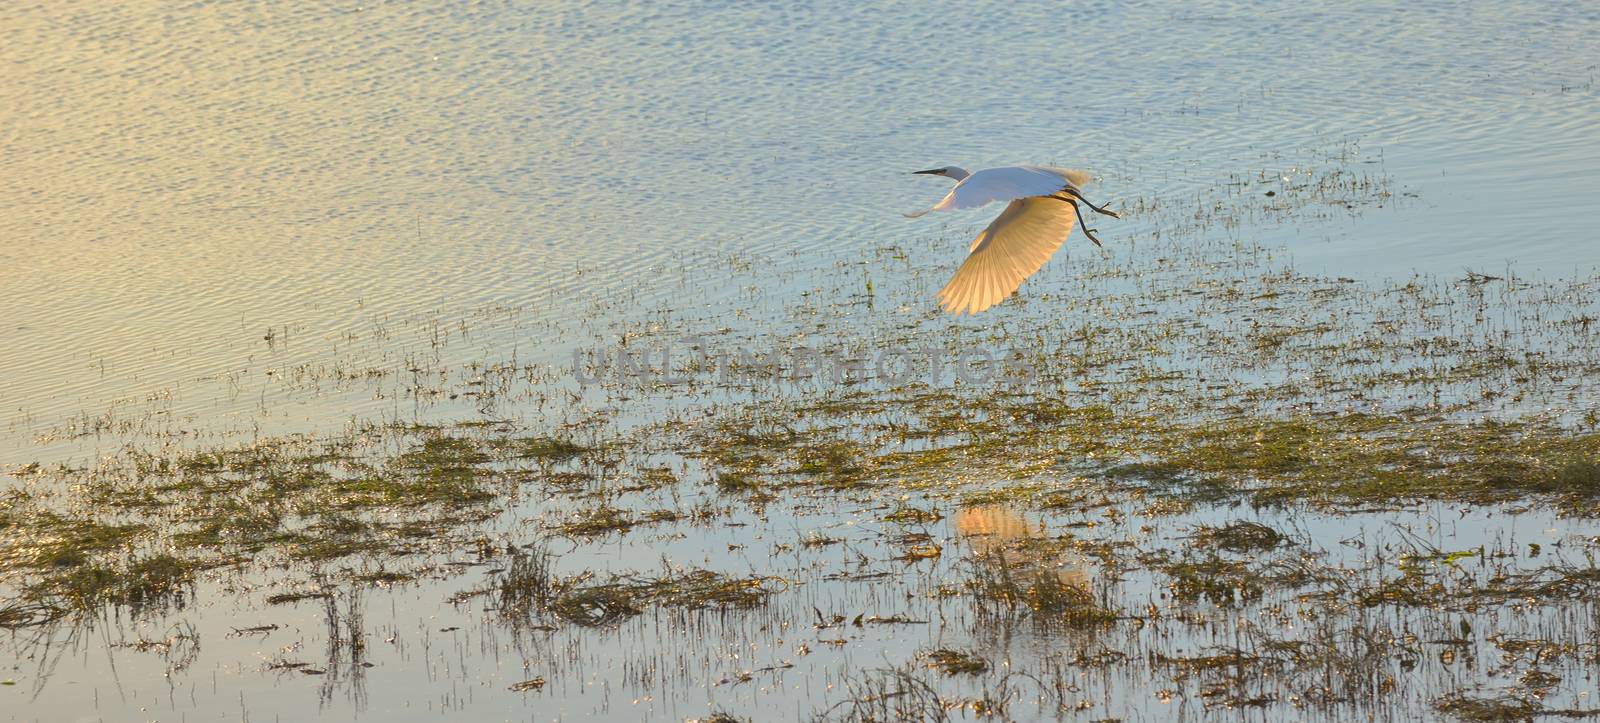 white egret in flight over danube delta